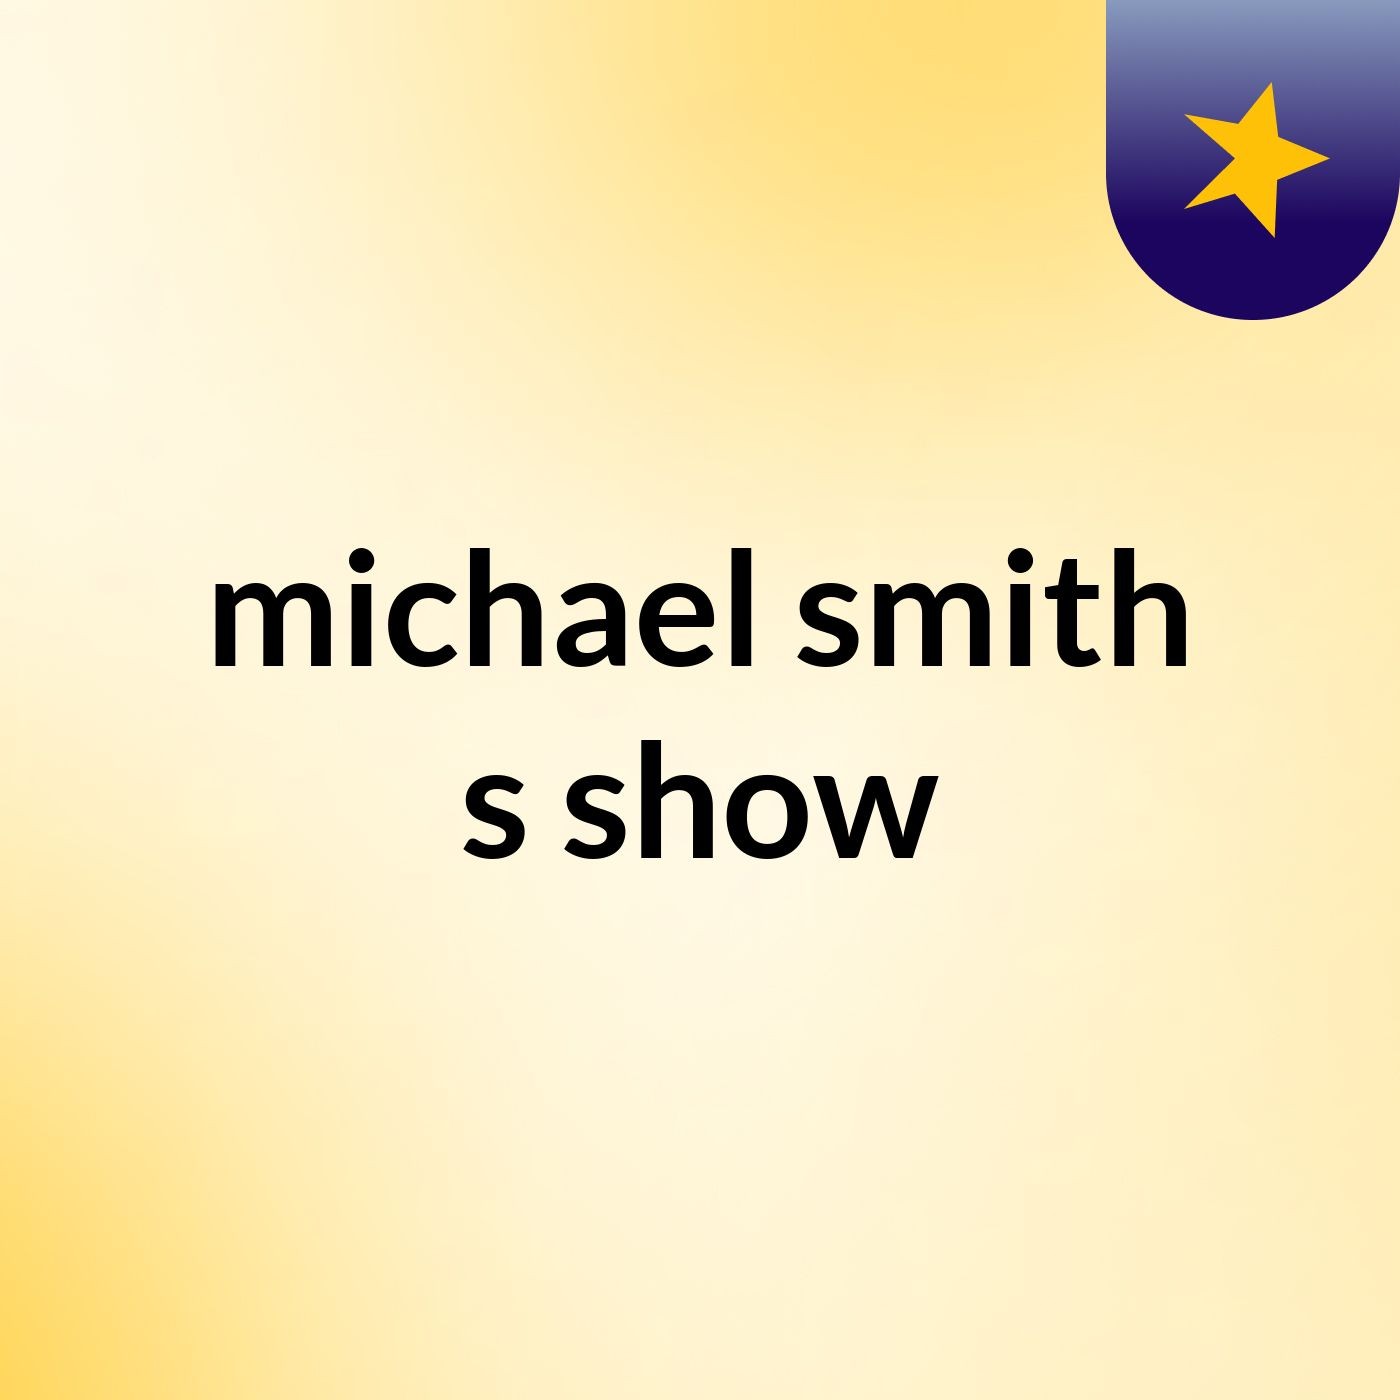 michael smith's show